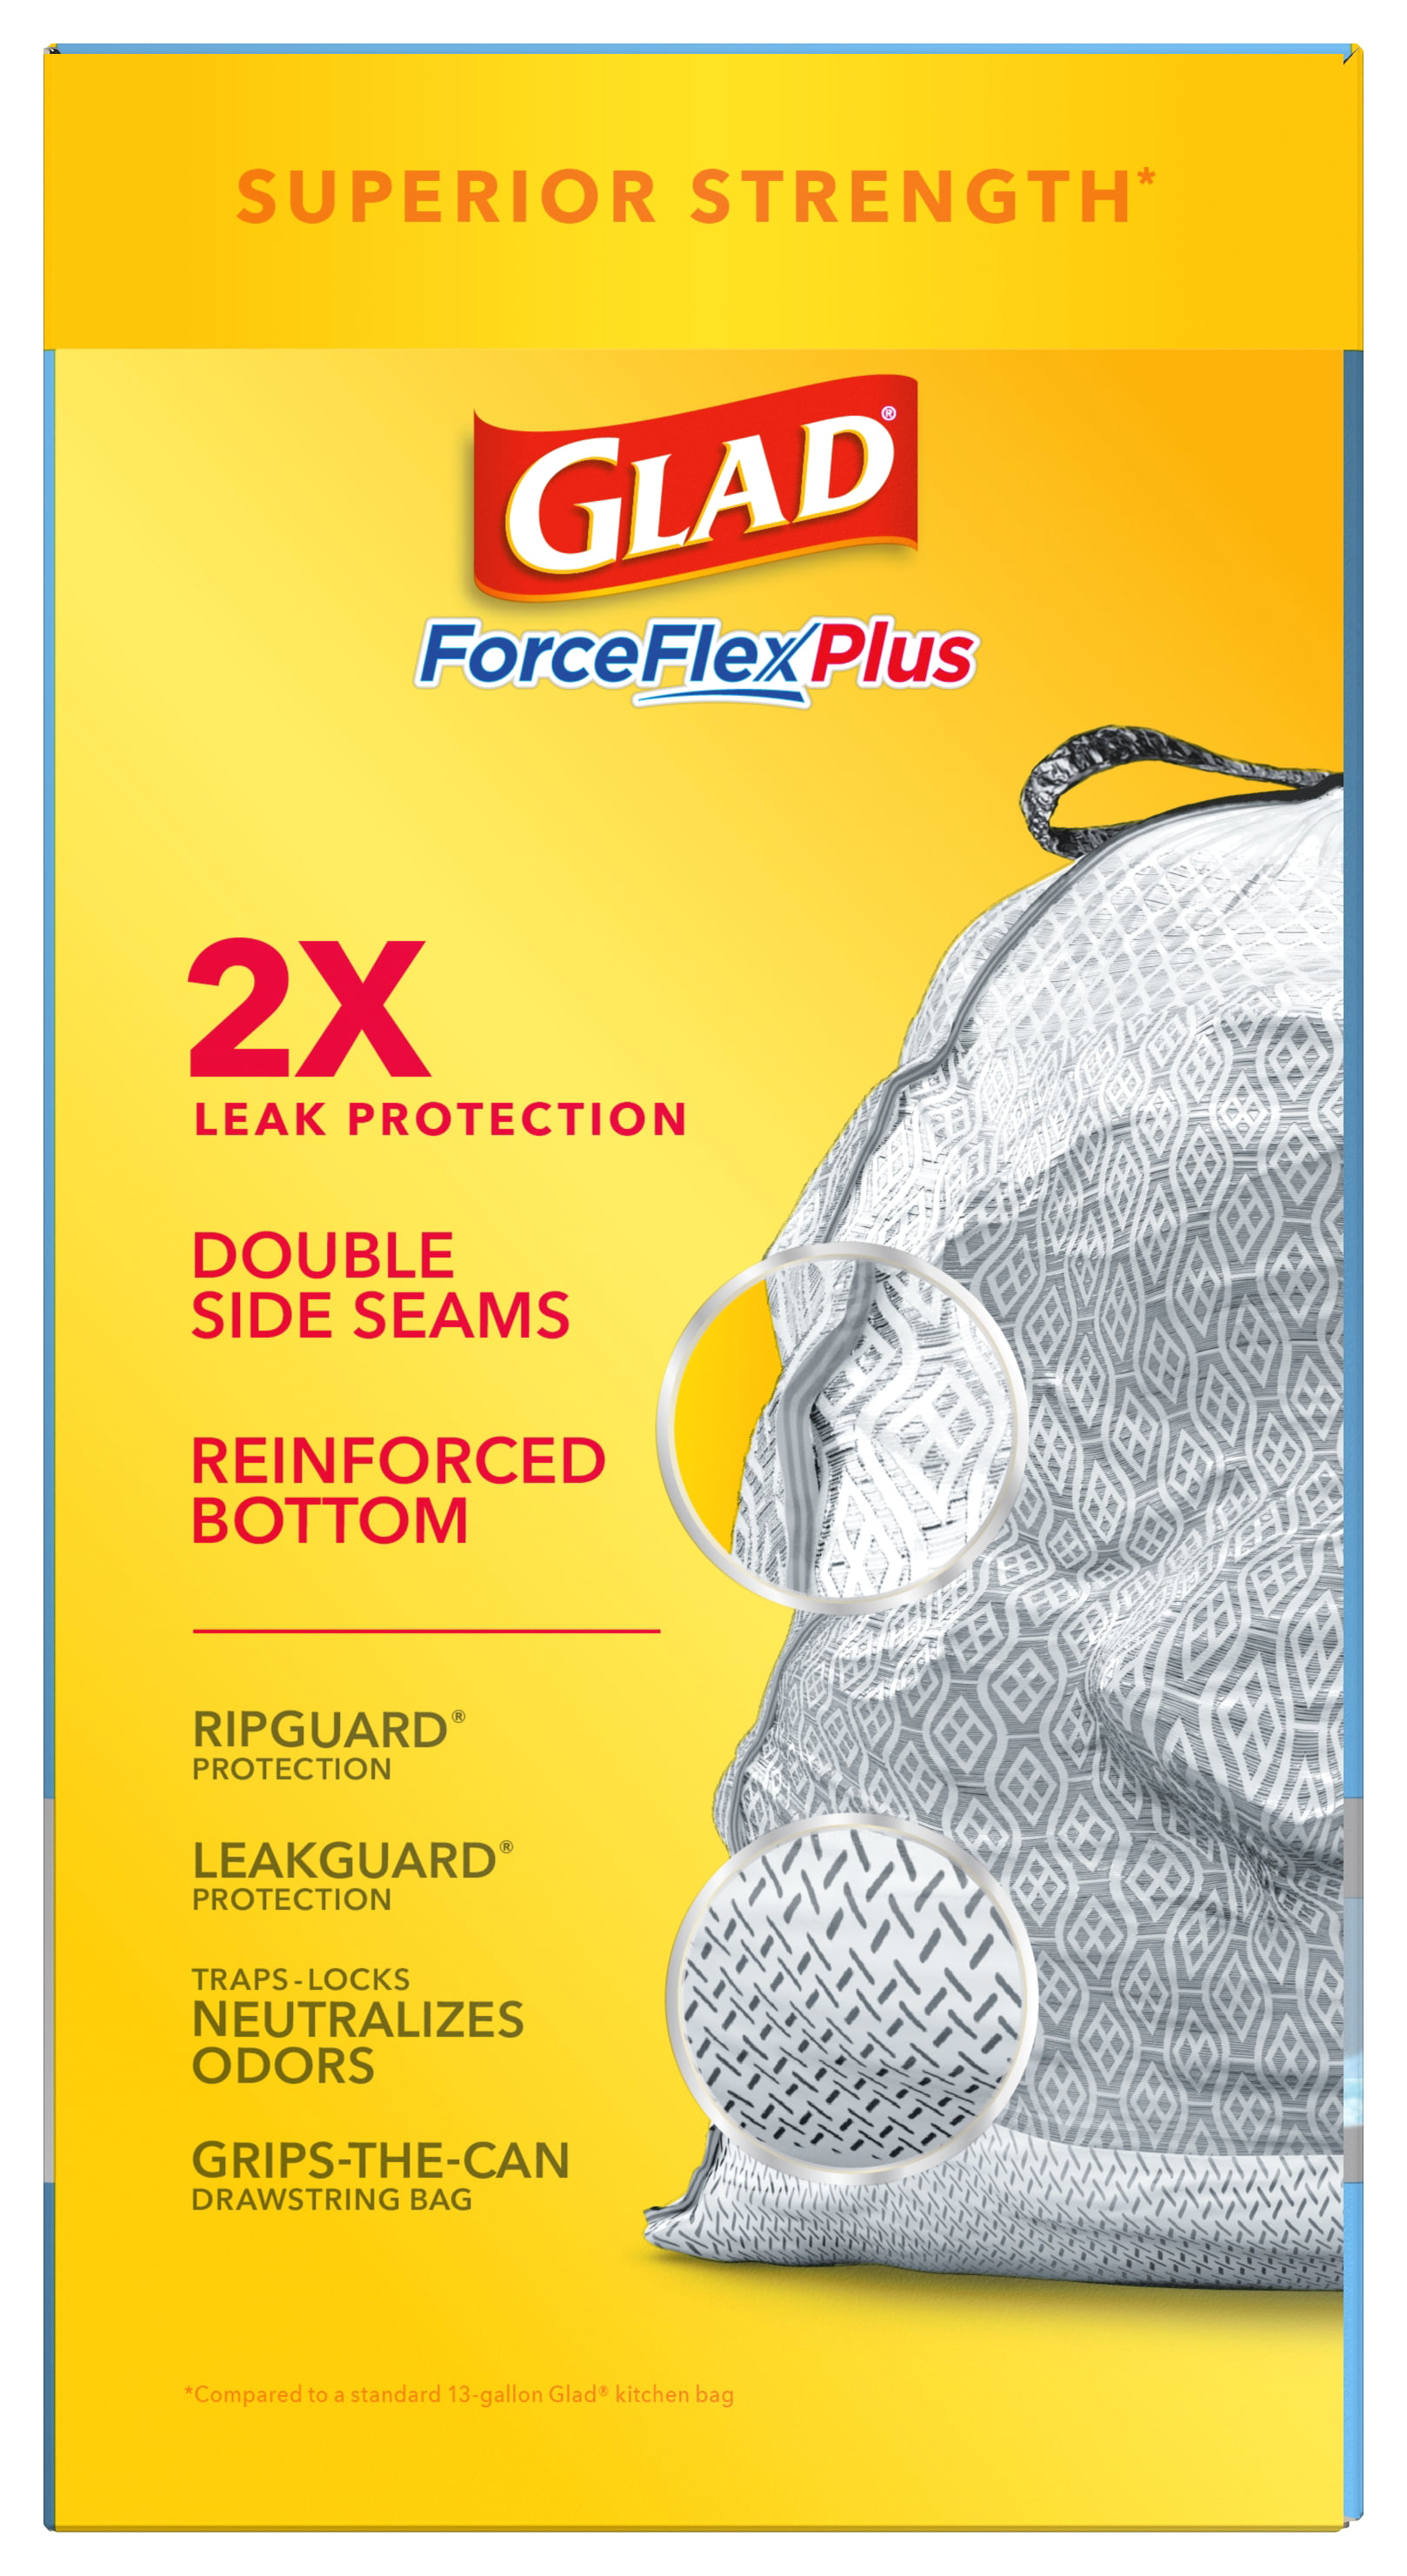 Glad ForceFlex Tall Kitchen Drawstring Trash Bags, 90 ct - Pay Less Super  Markets